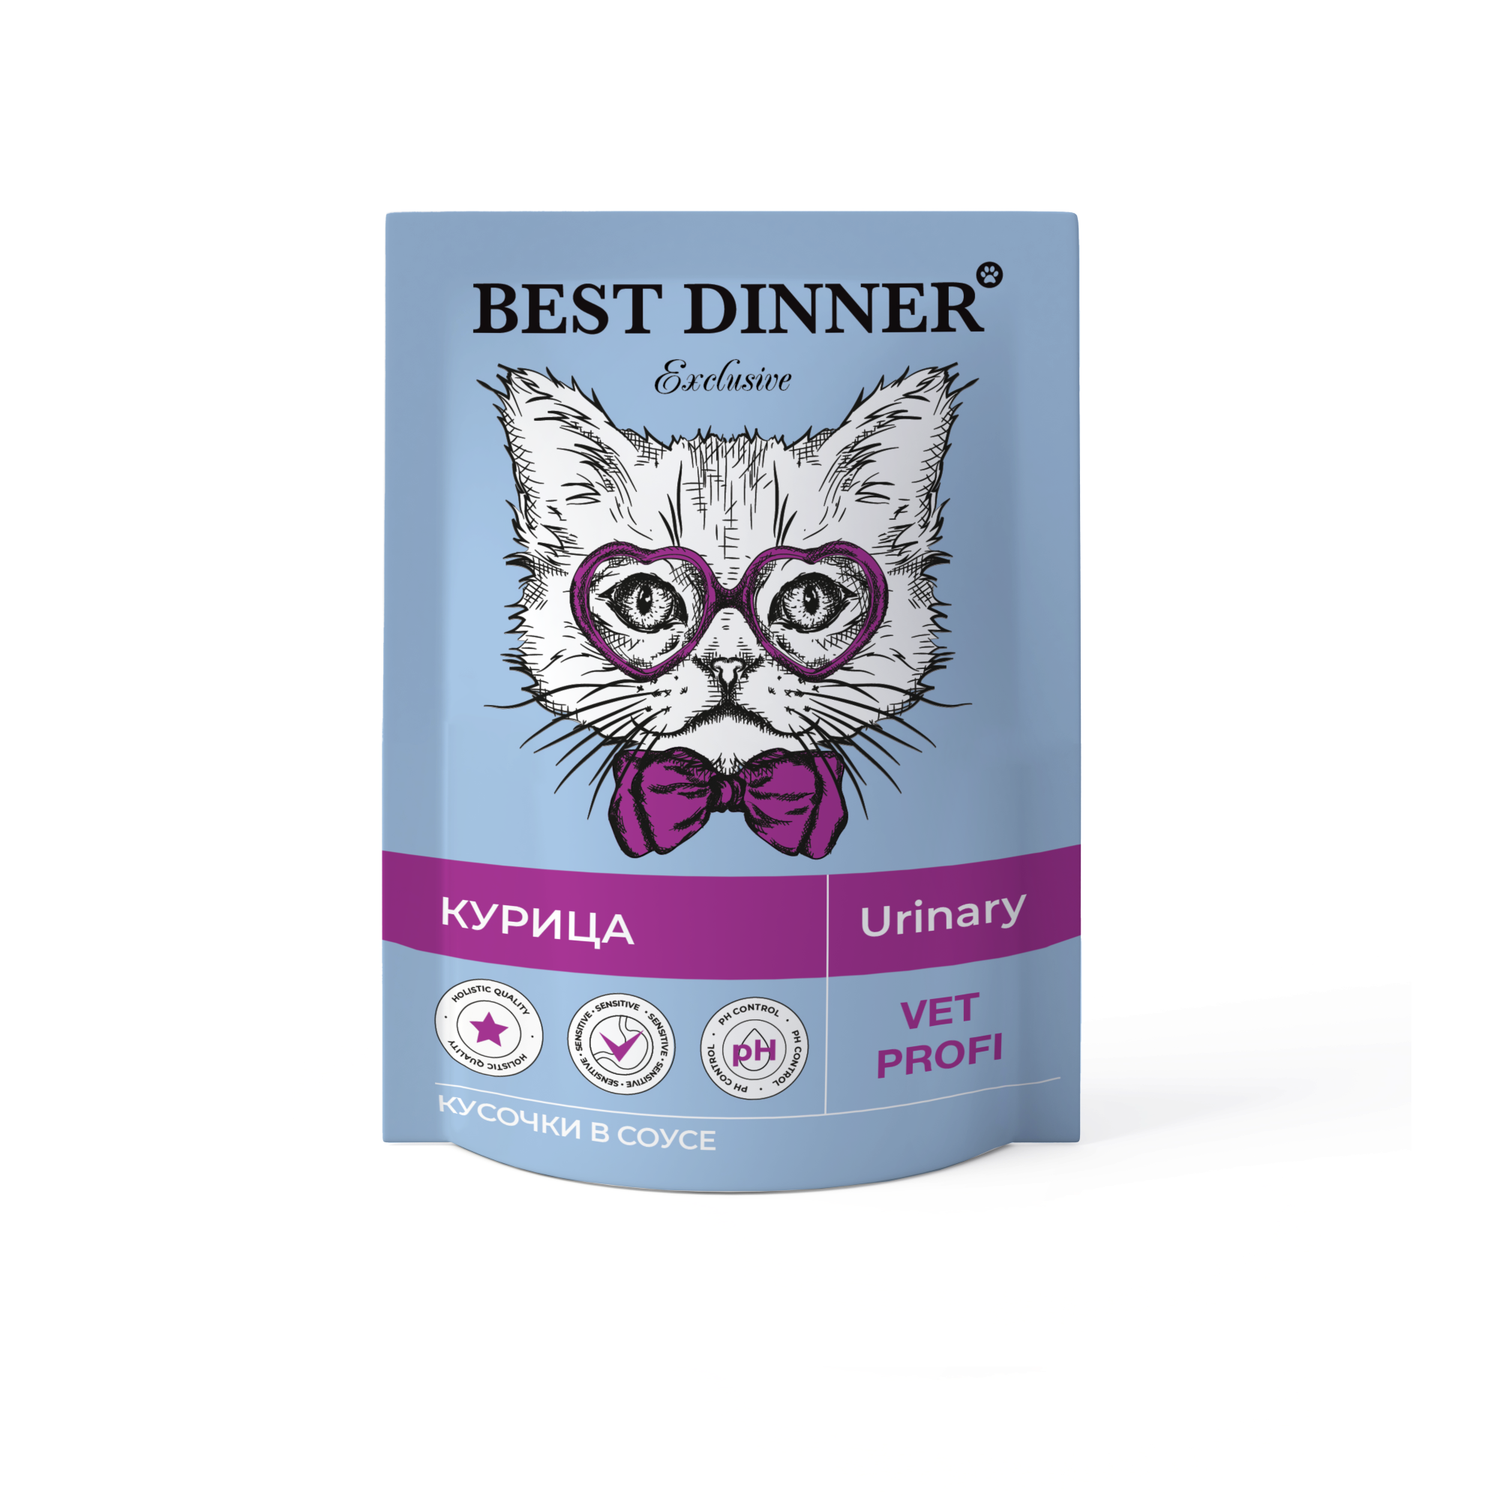 Корм для кошек Best Dinner 85г Exclusive Vet Profi Urinary кусочки в соусе с курицей - фото 1